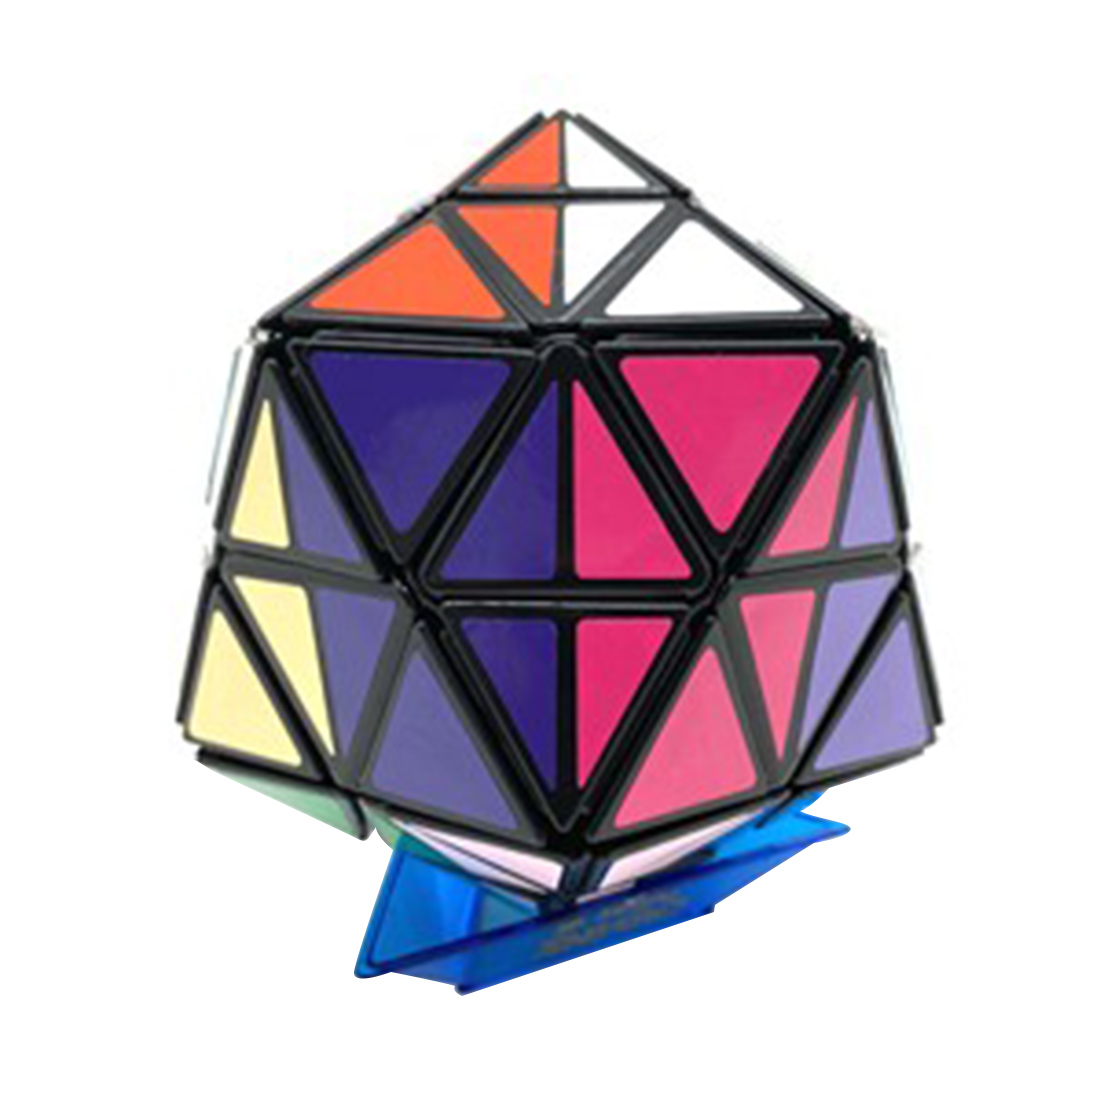 Calvin's Icosahedron Dogix Magic Cube (Black Body)